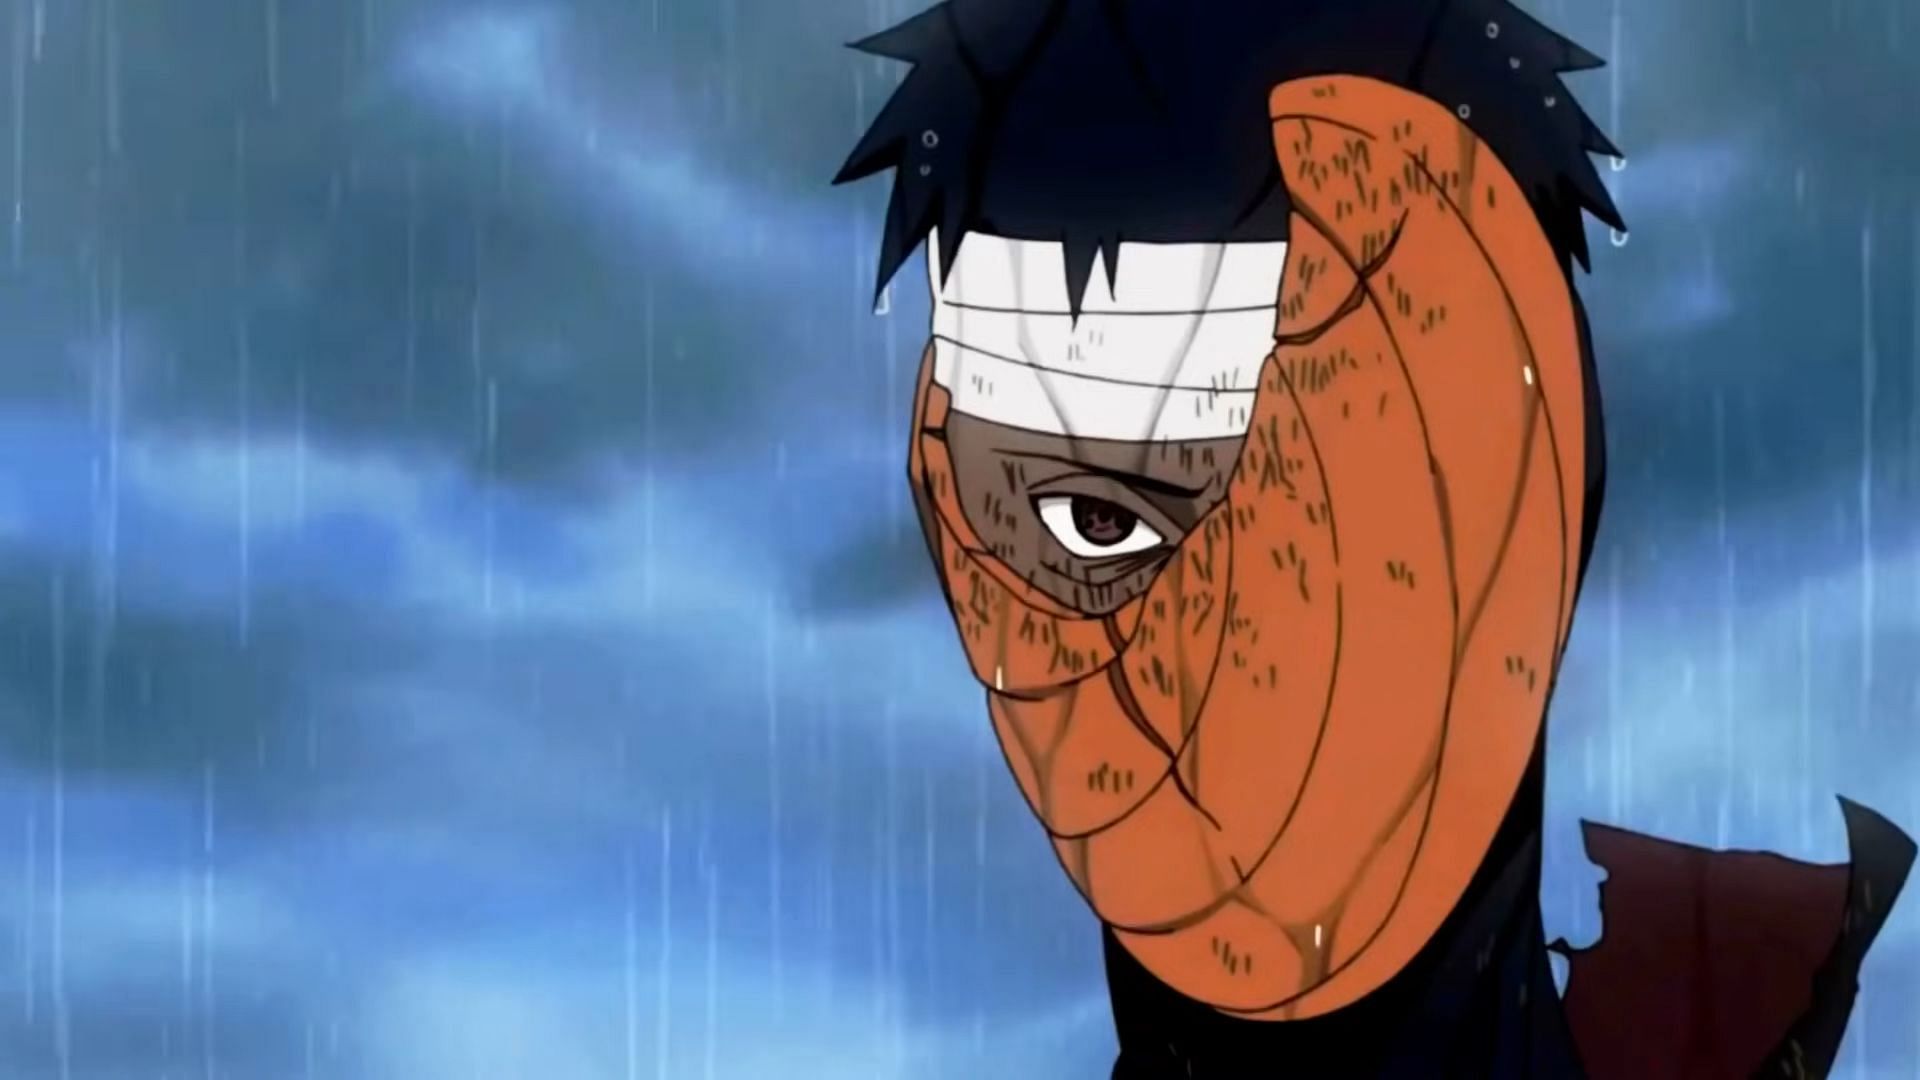 Obito Uchiha as seen in the Naruto Shippuden anime (Image via Studio Pierrot)